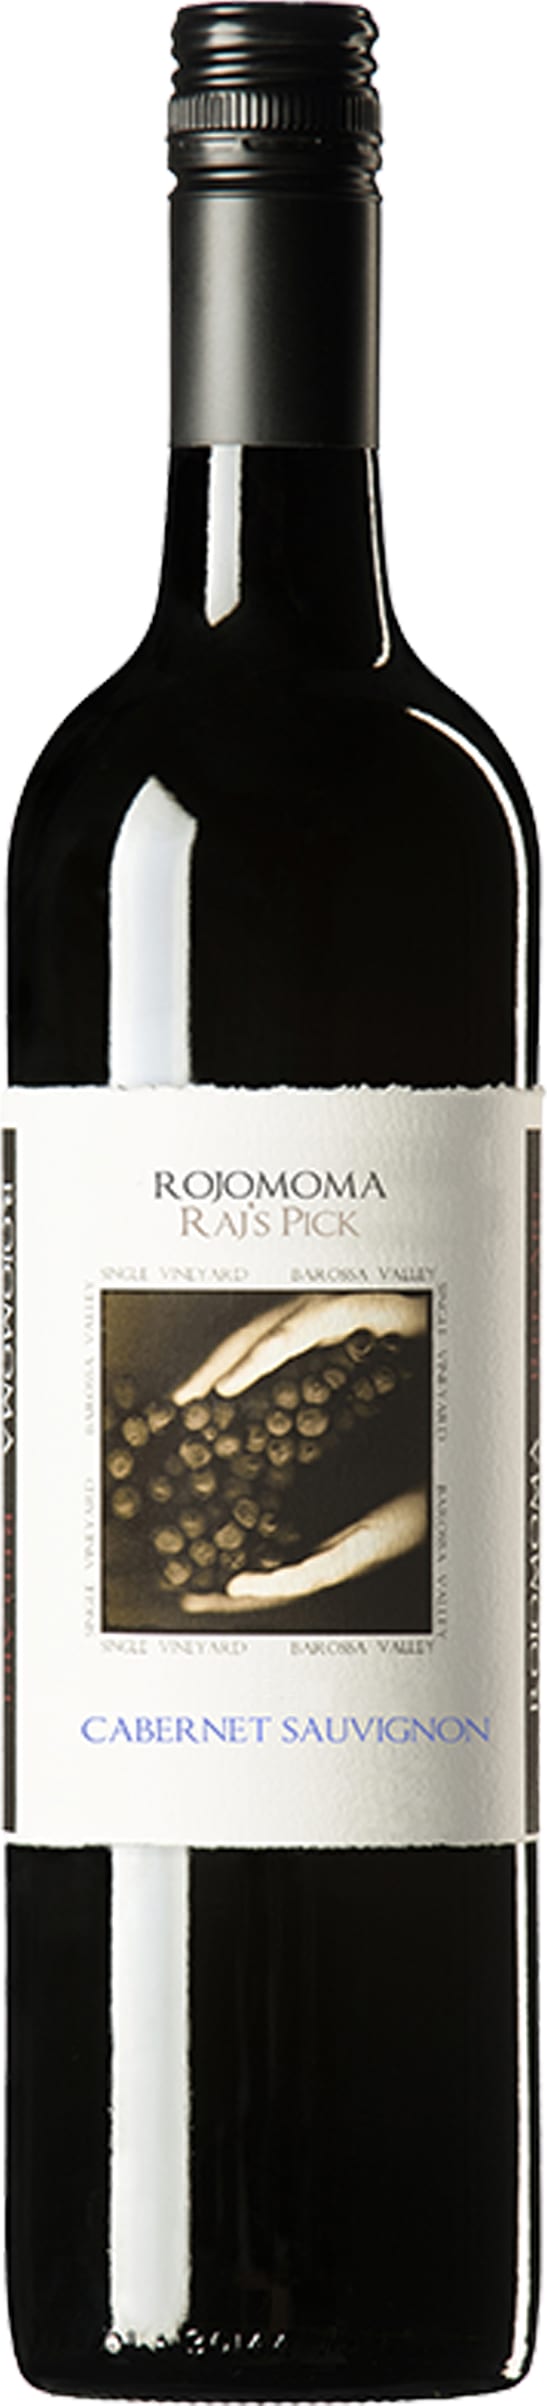 Rojomoma Raj's Pick Cabernet Sauvignon 2015 75cl - Buy Rojomoma Wines from GREAT WINES DIRECT wine shop